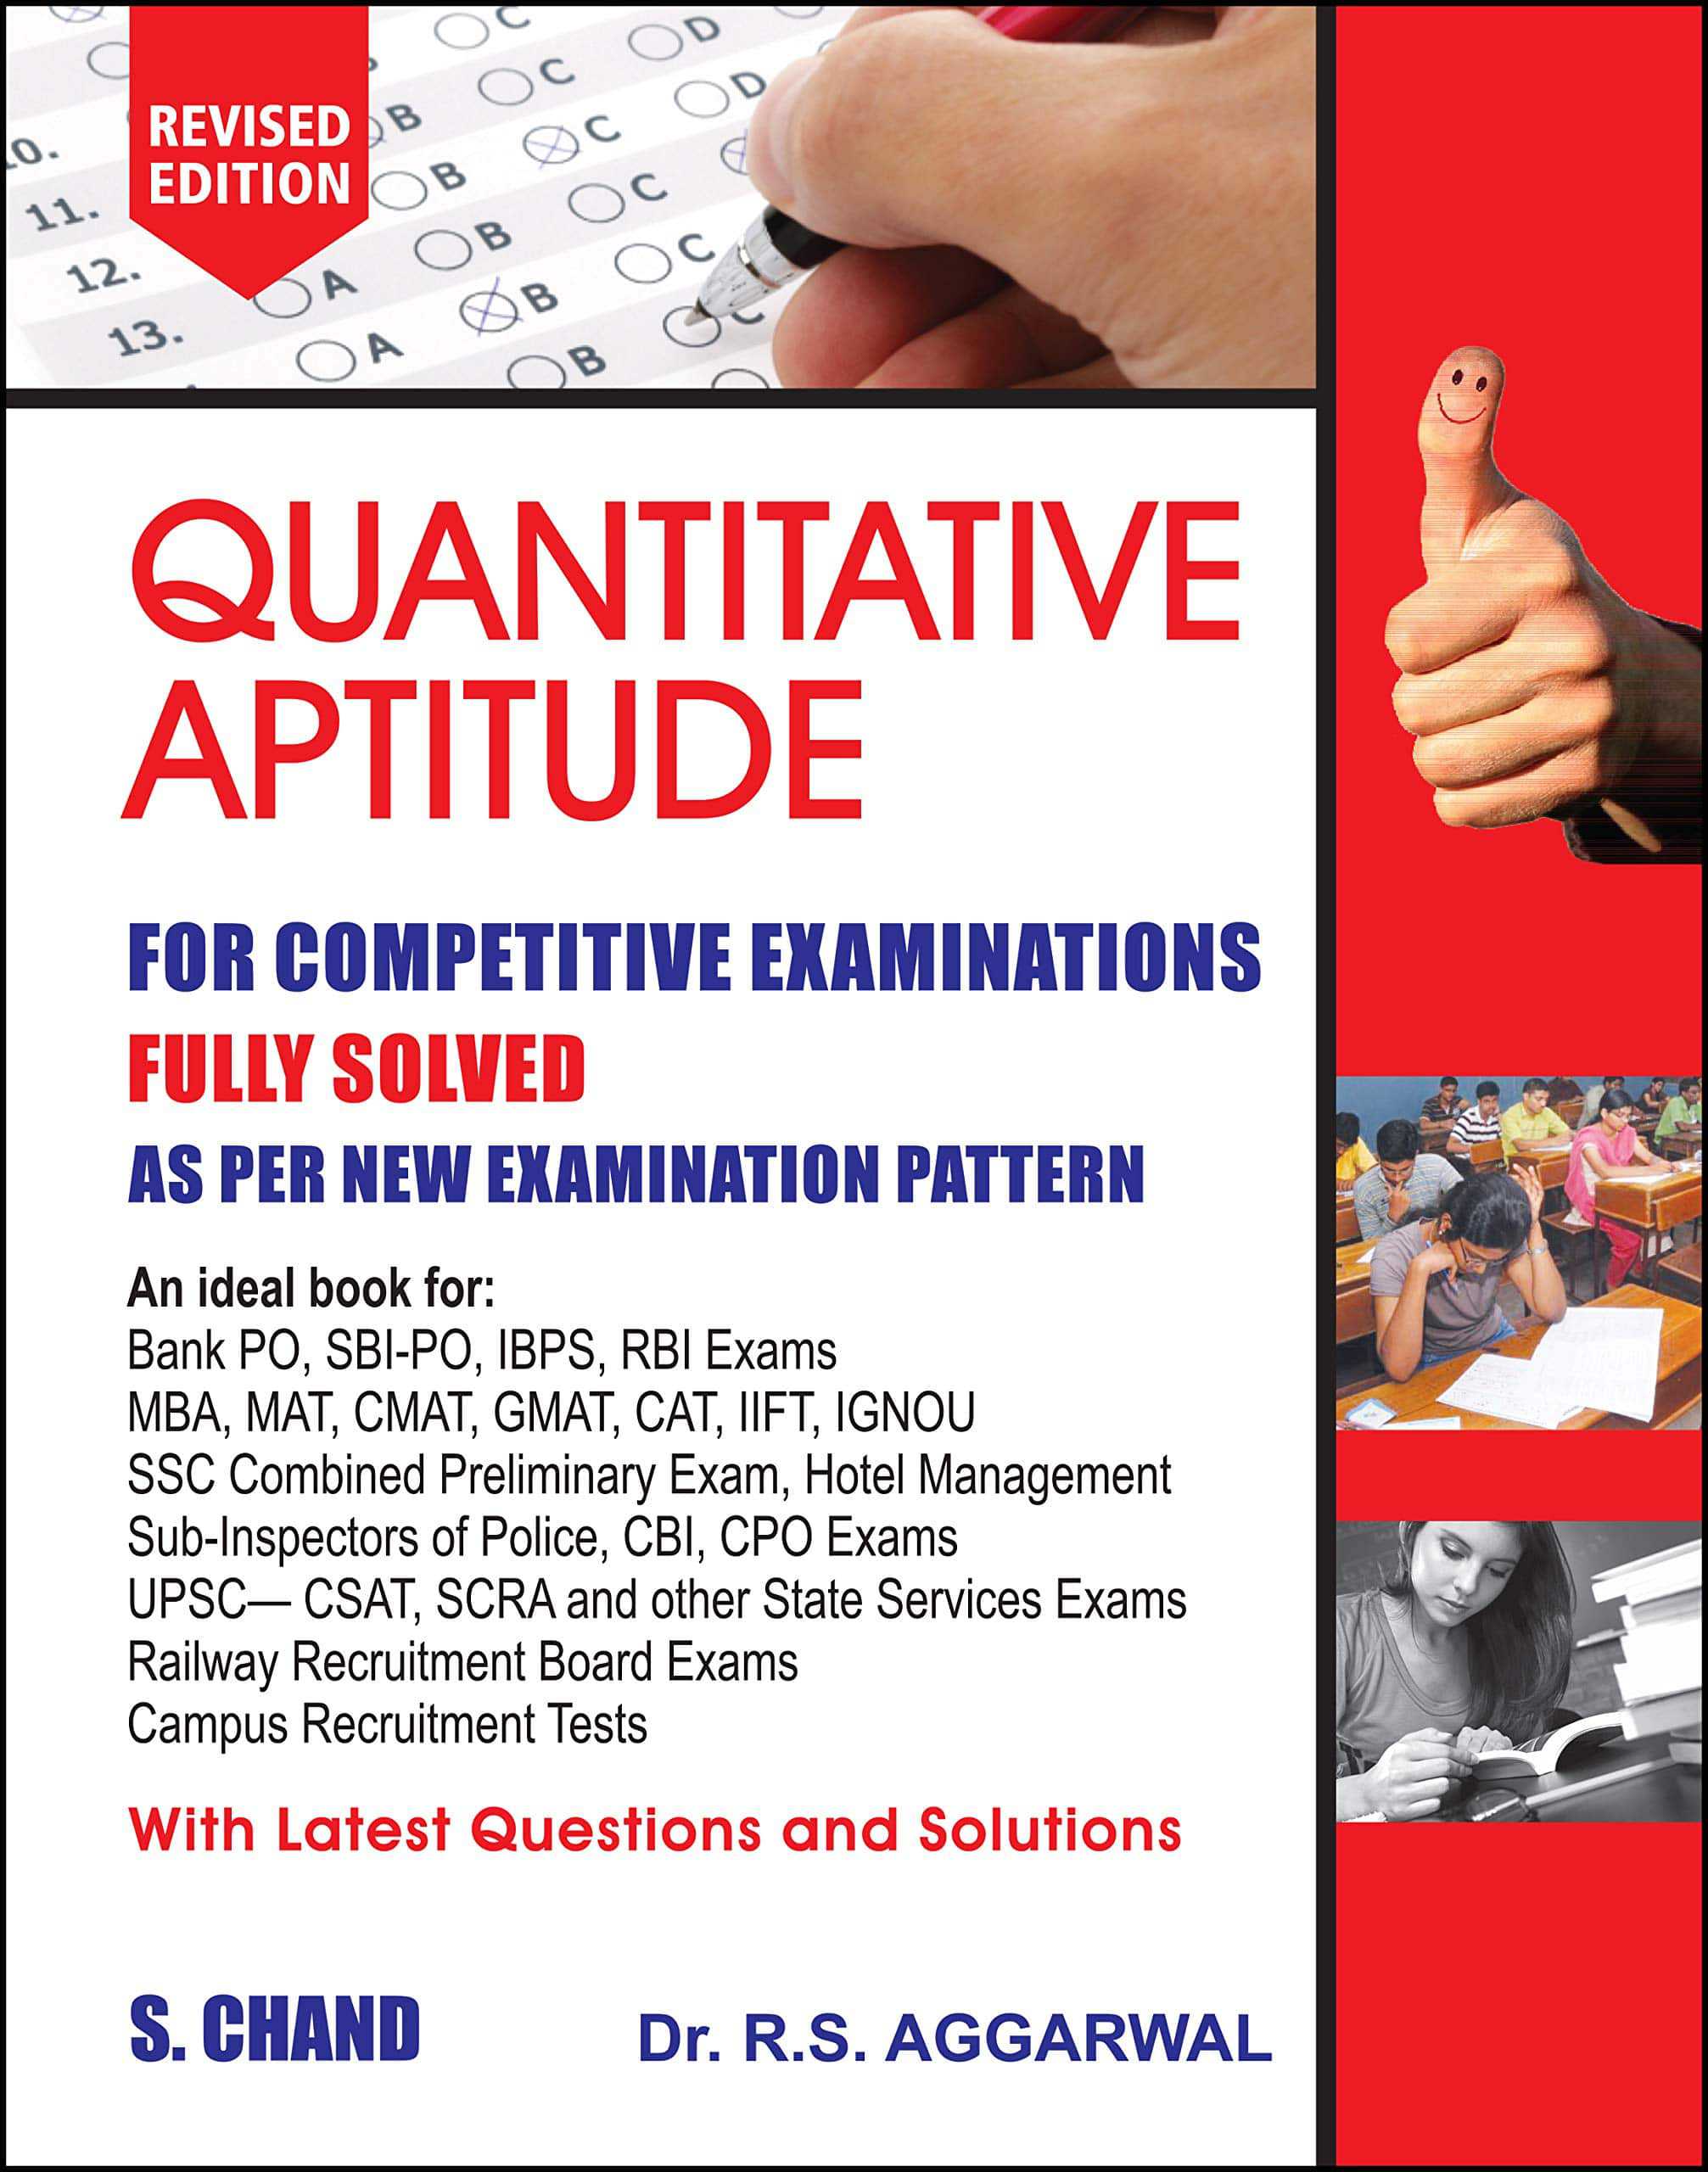 rs-aggarwal-quantitative-aptitude-book-review-buying-guide